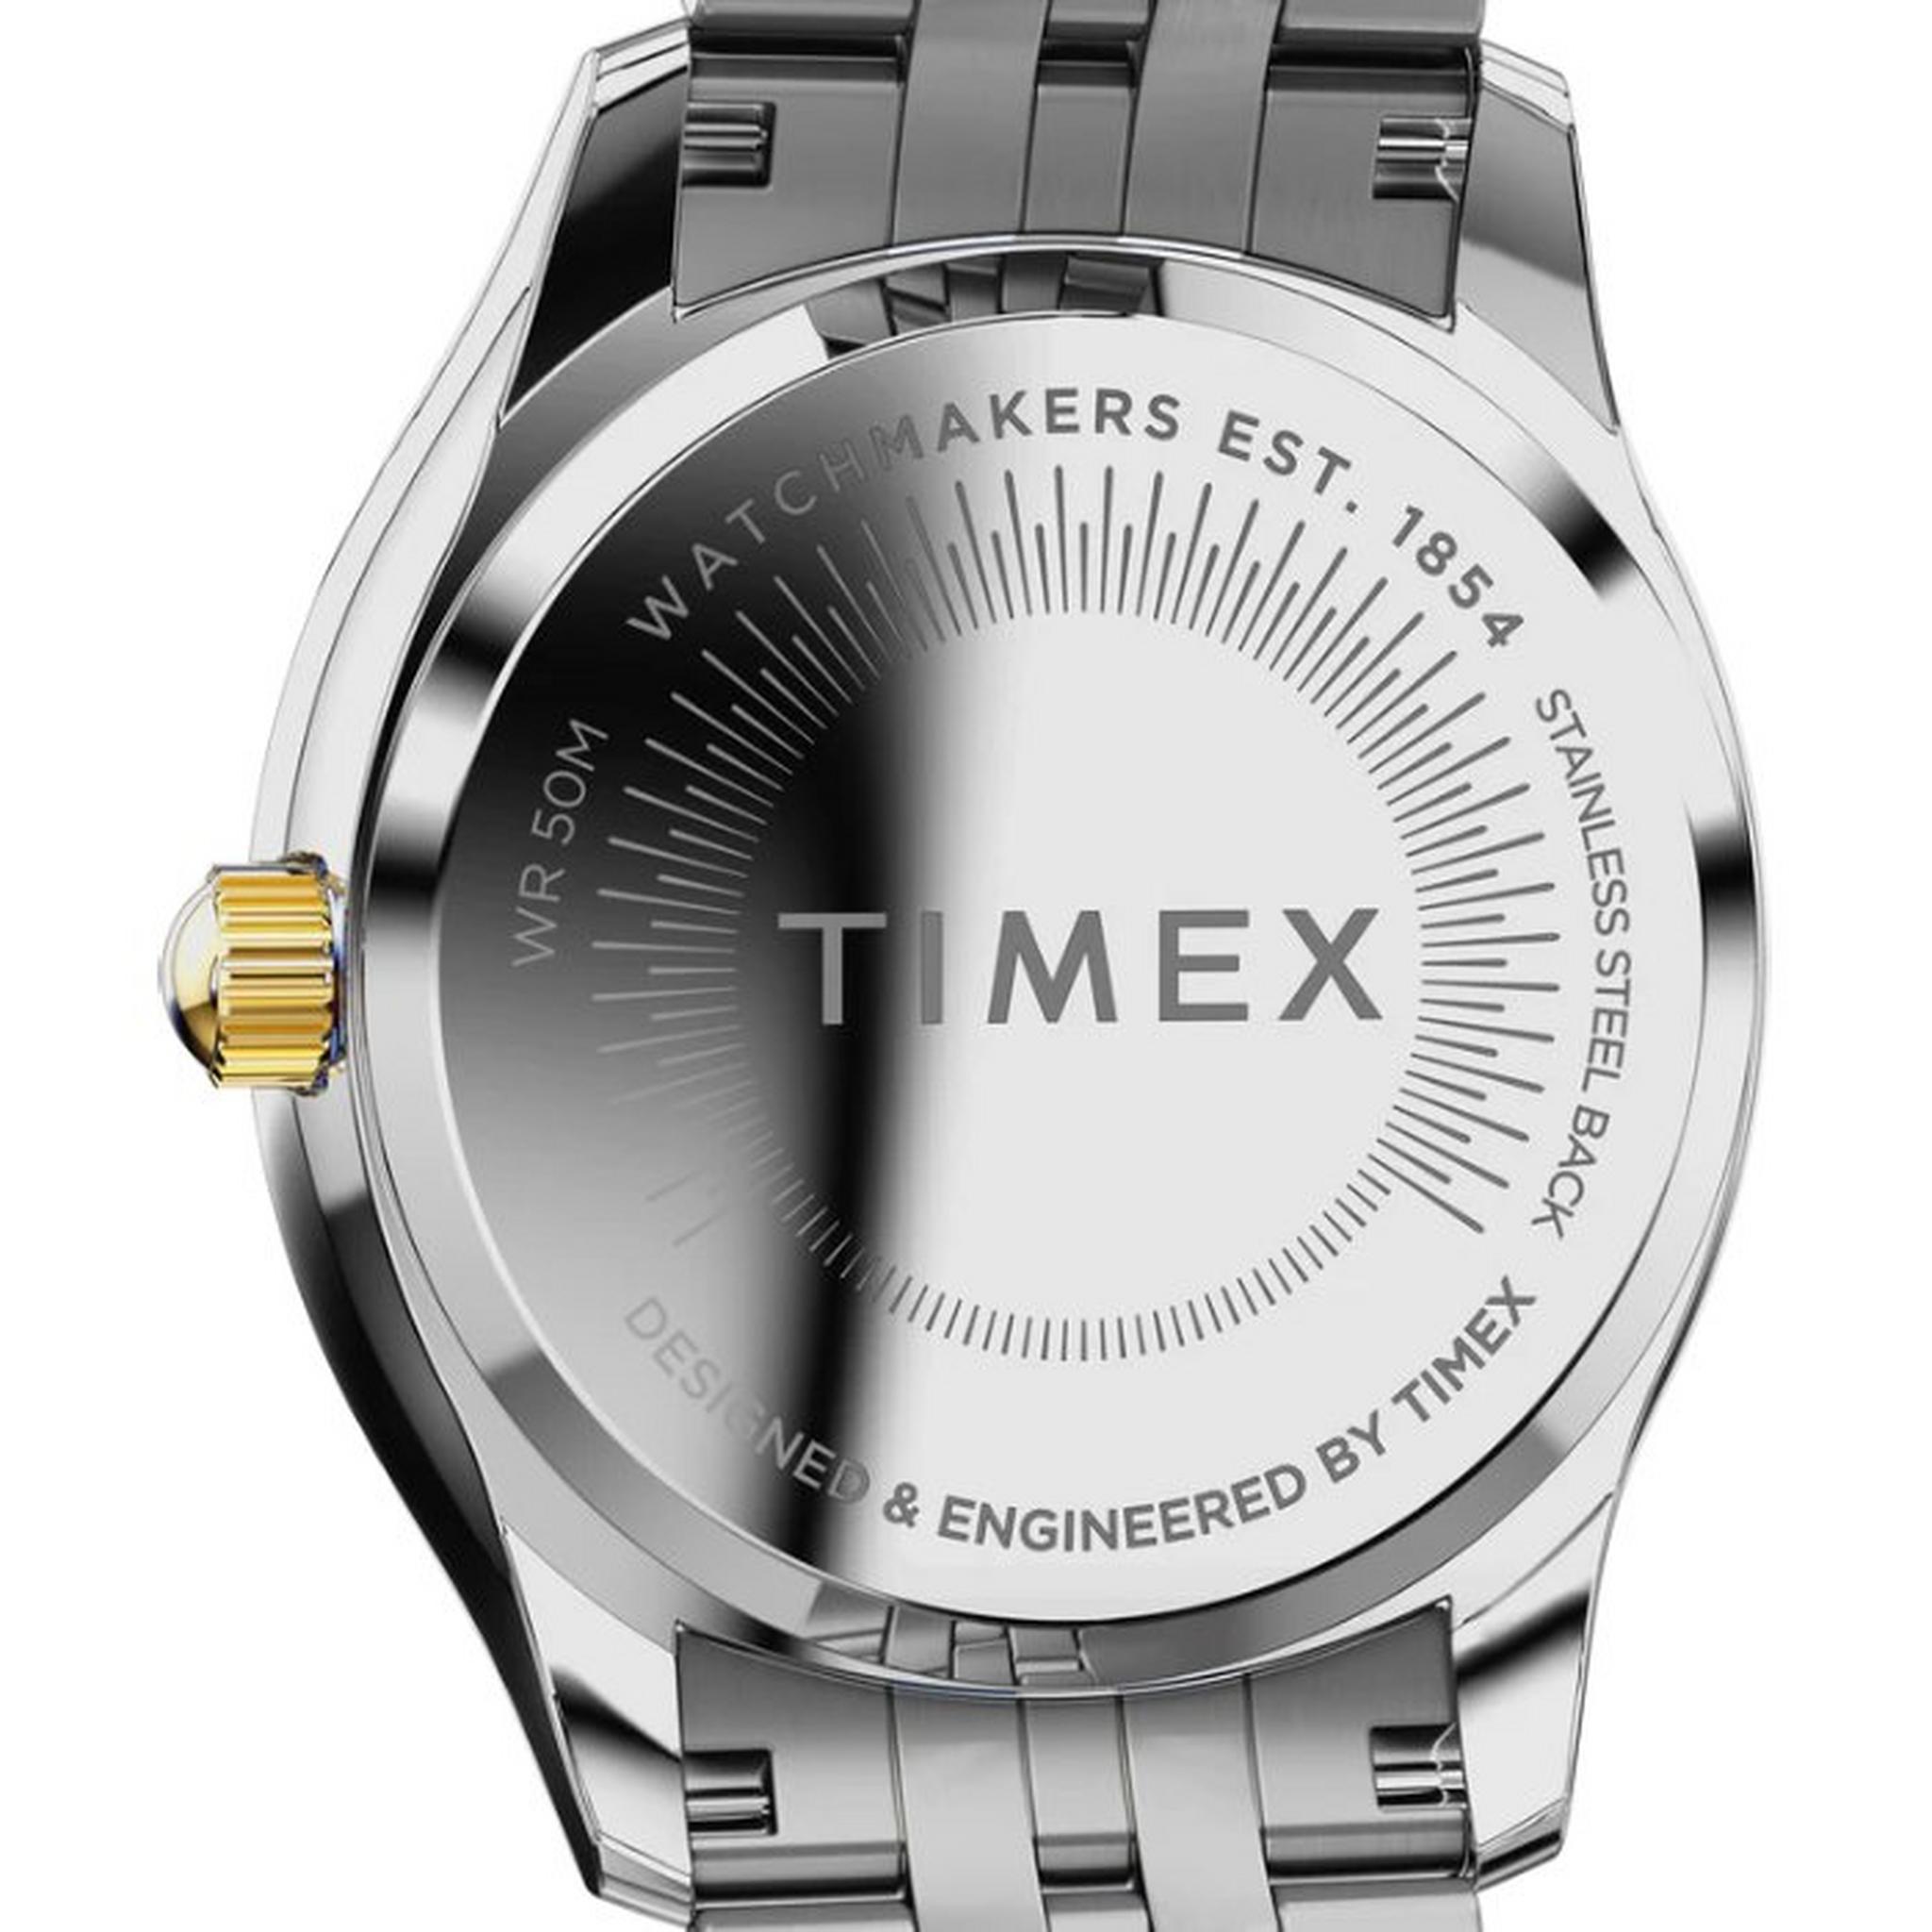 Timex Ariana Women’s Watch, 36mm, Stainless Steel Strap, Analog, TW2W17700 – Silver/Gold